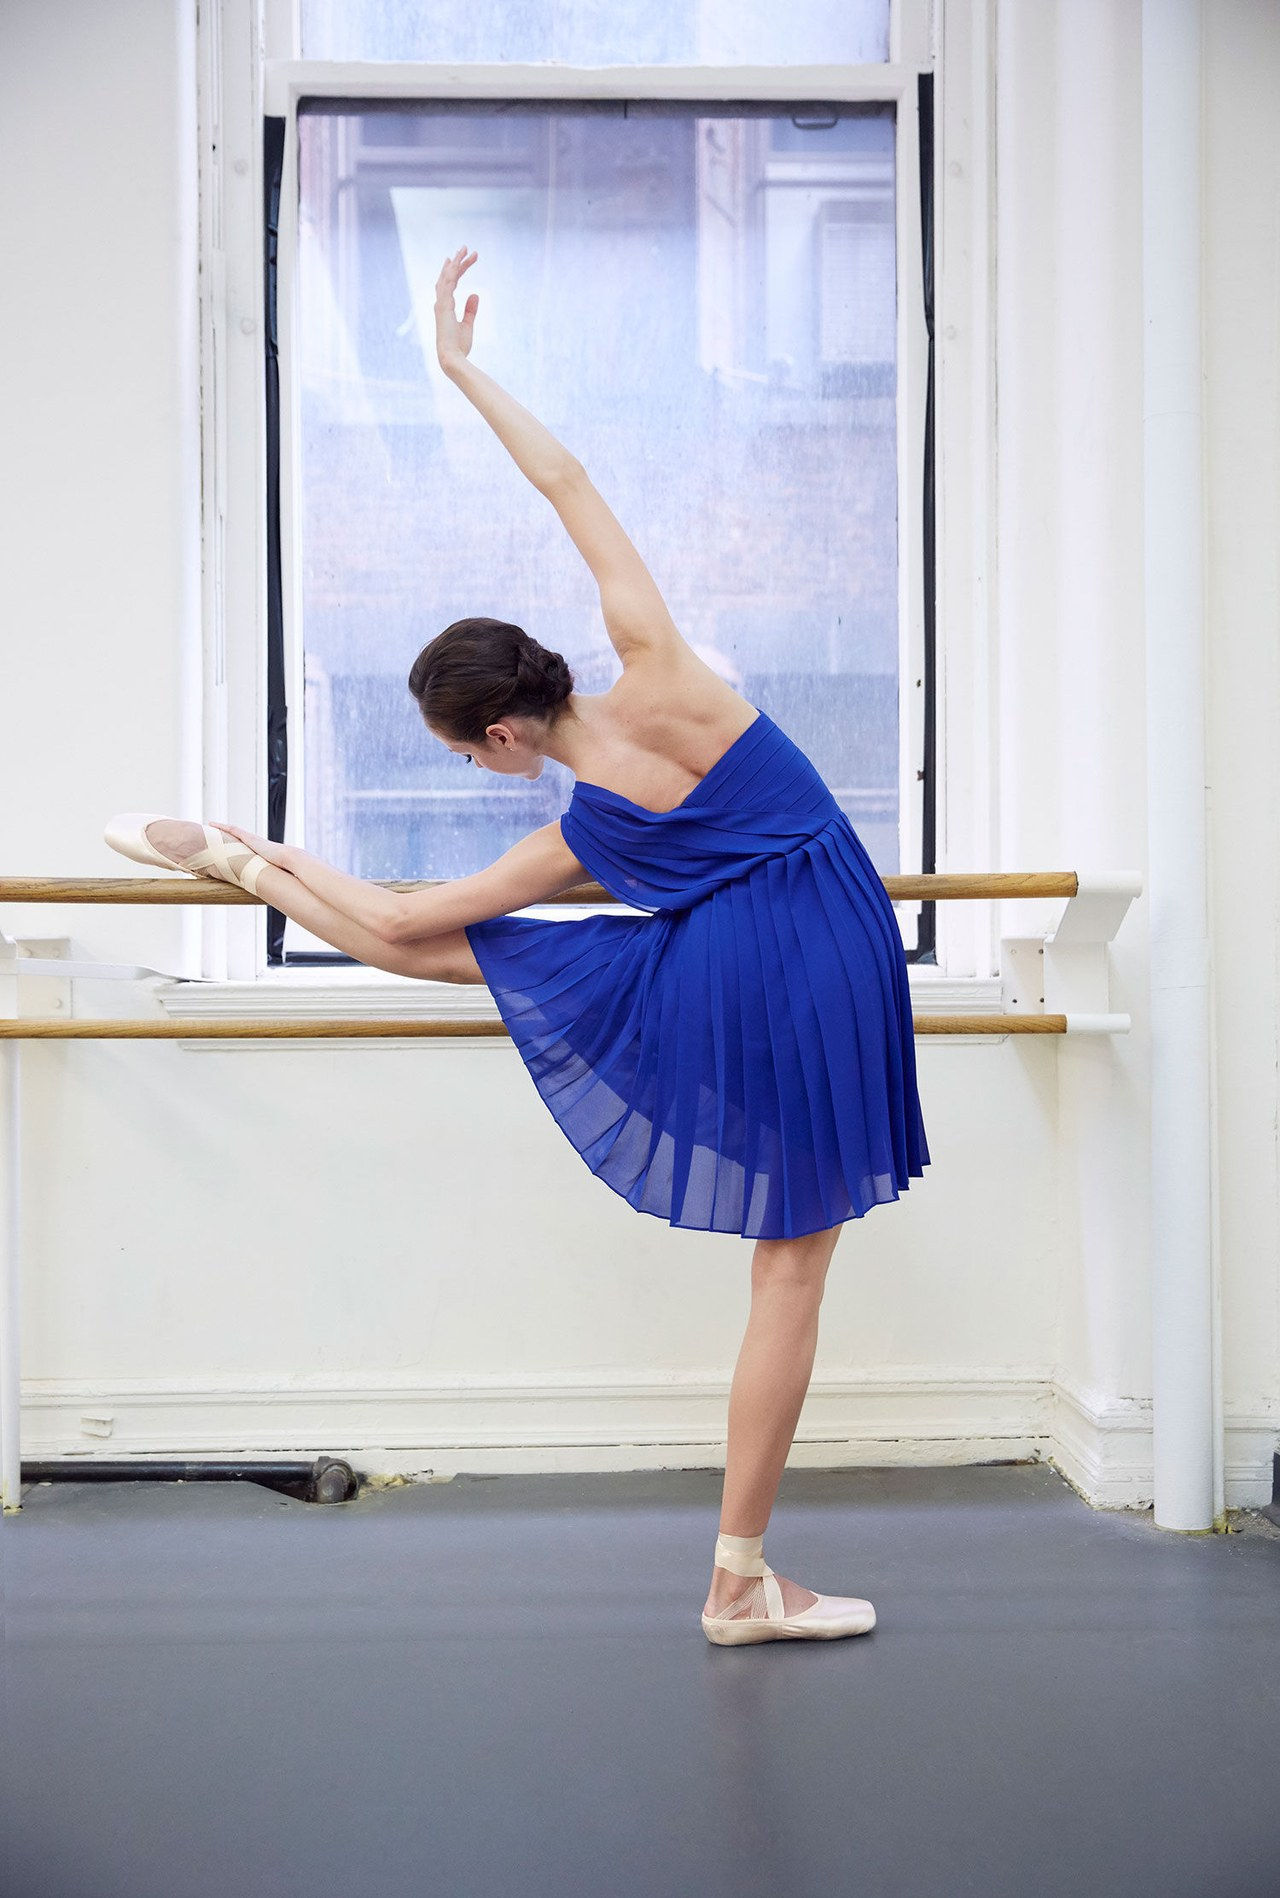 凯蒂 Bowen ballerina blue dress stretching